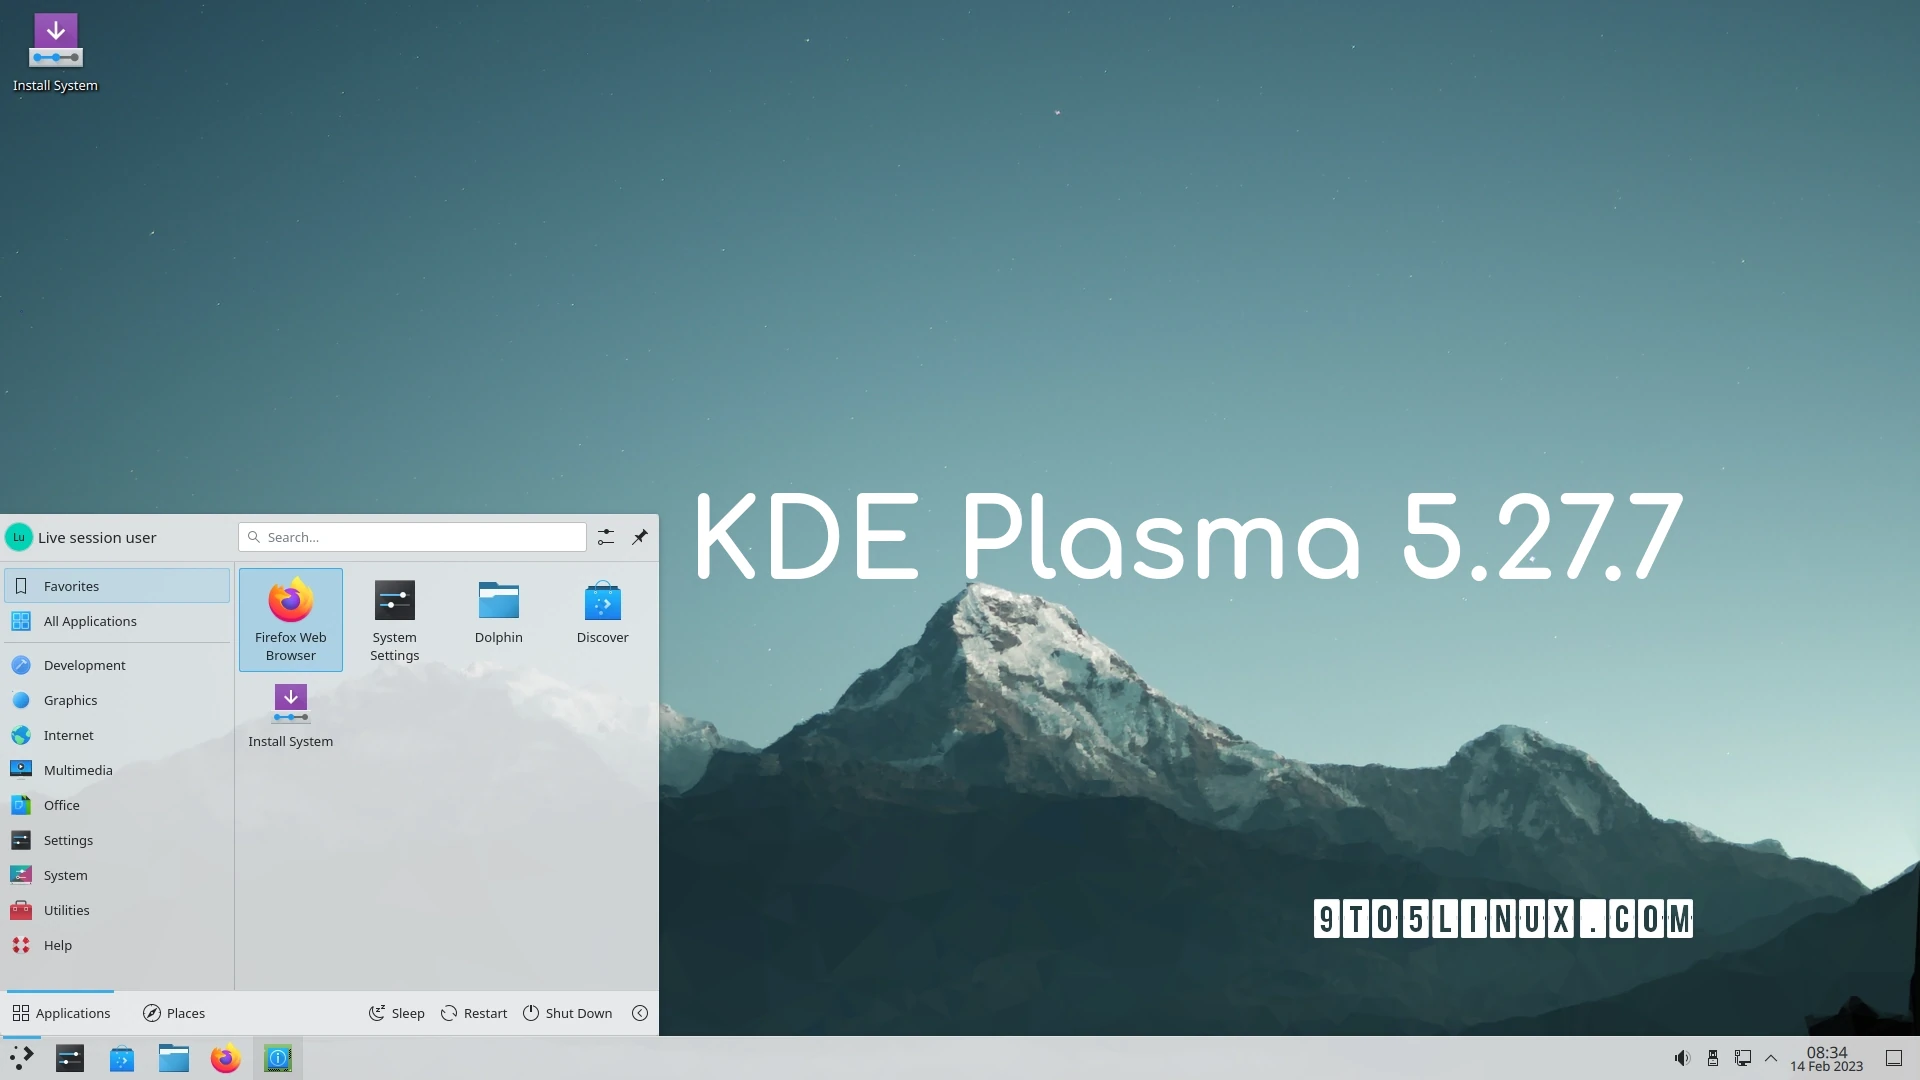 KDE Plasma 5.27.7 Improves Support for Multi-Channel Audio Setups, Fixes Bugs